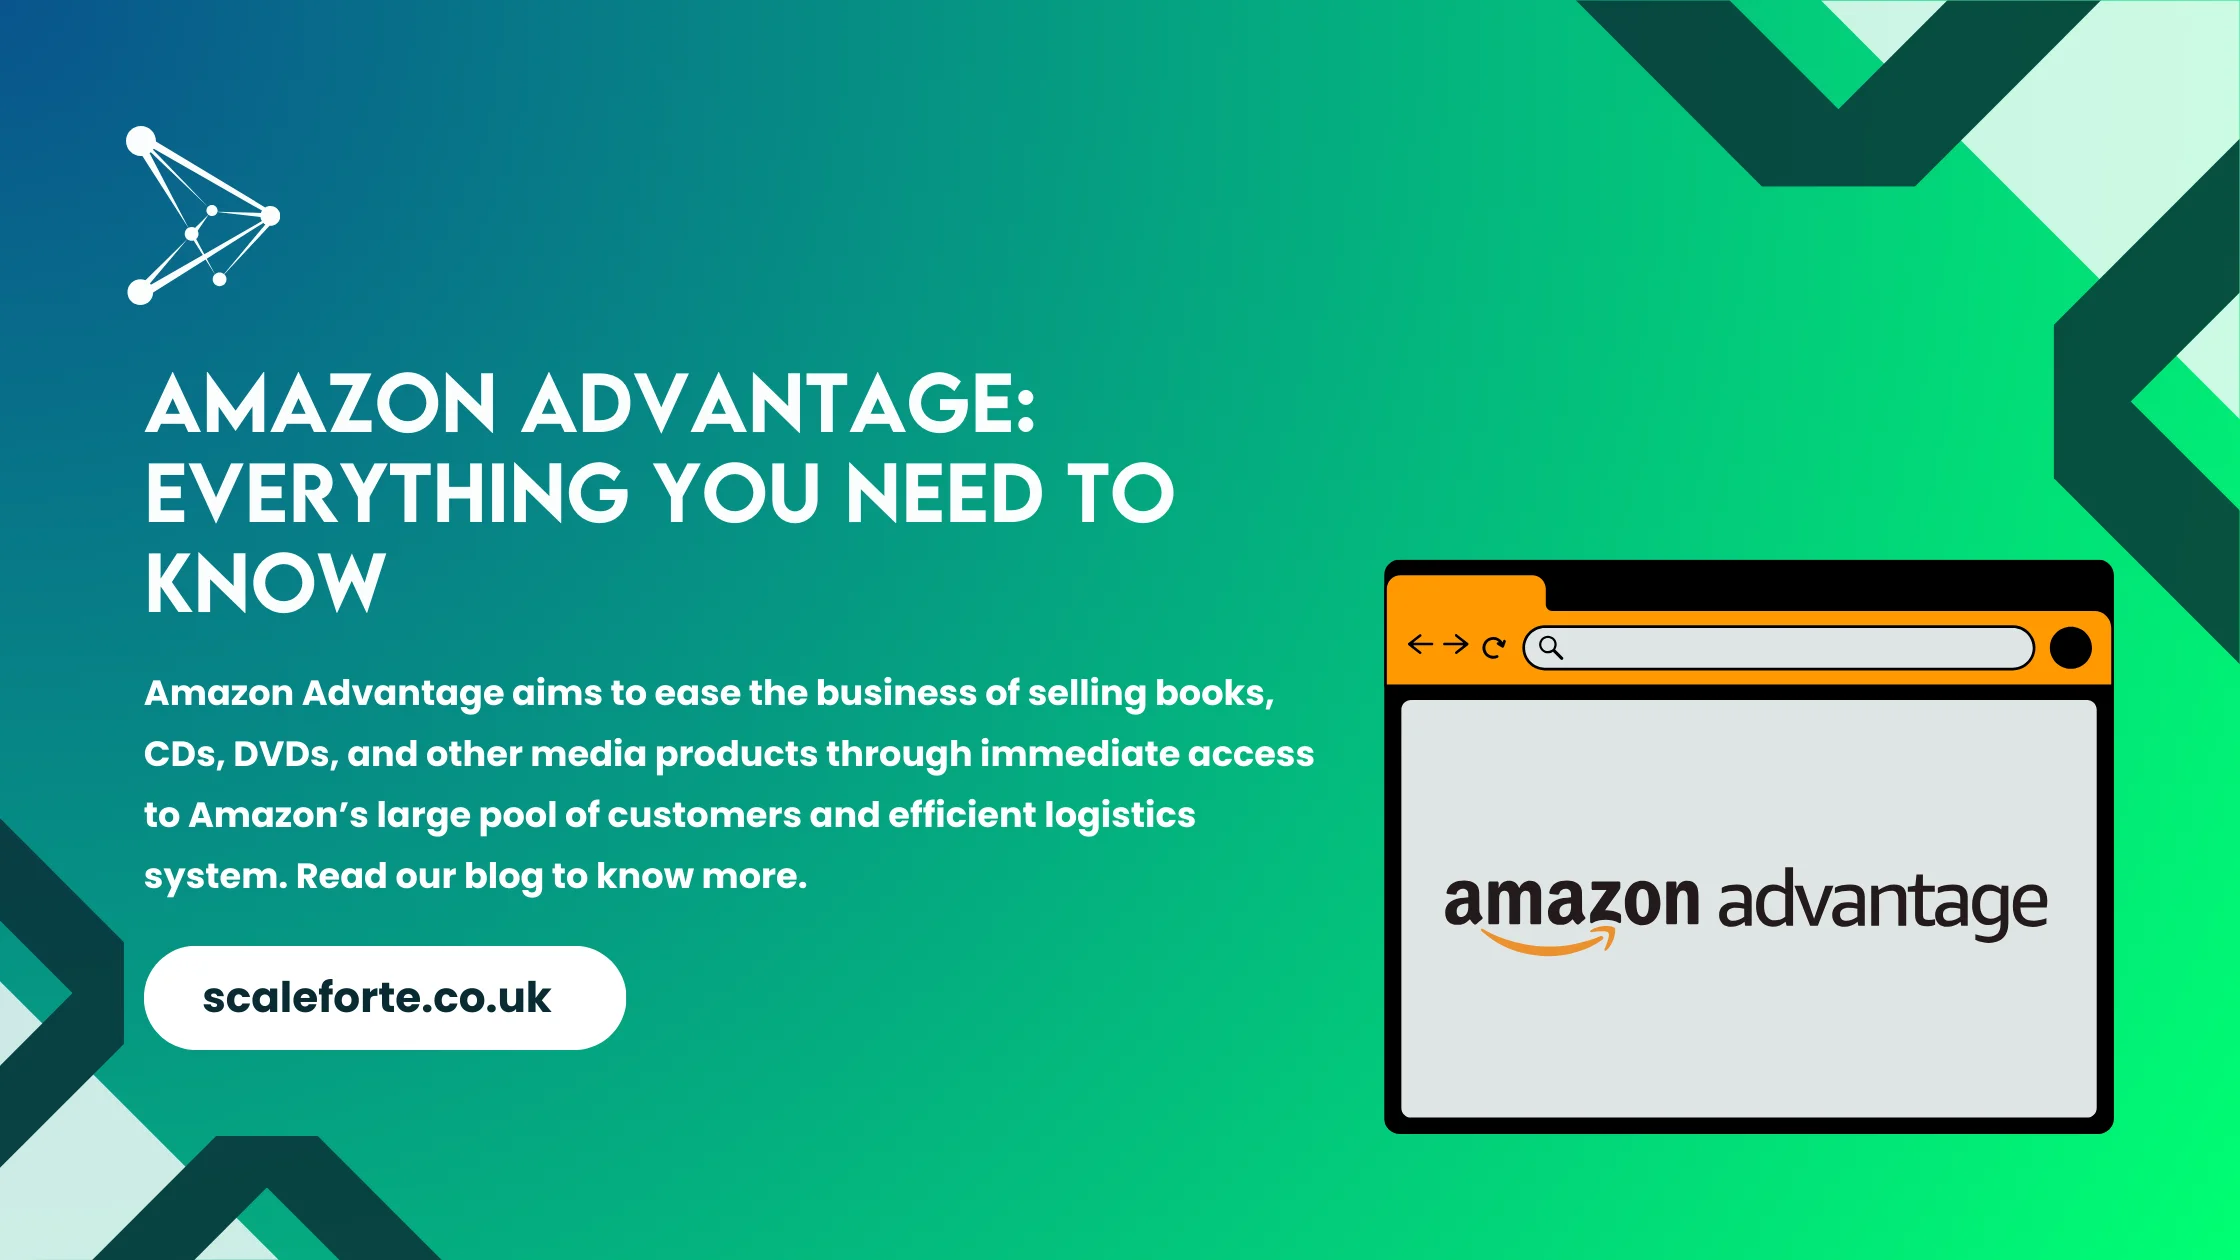 Amazon Advantage